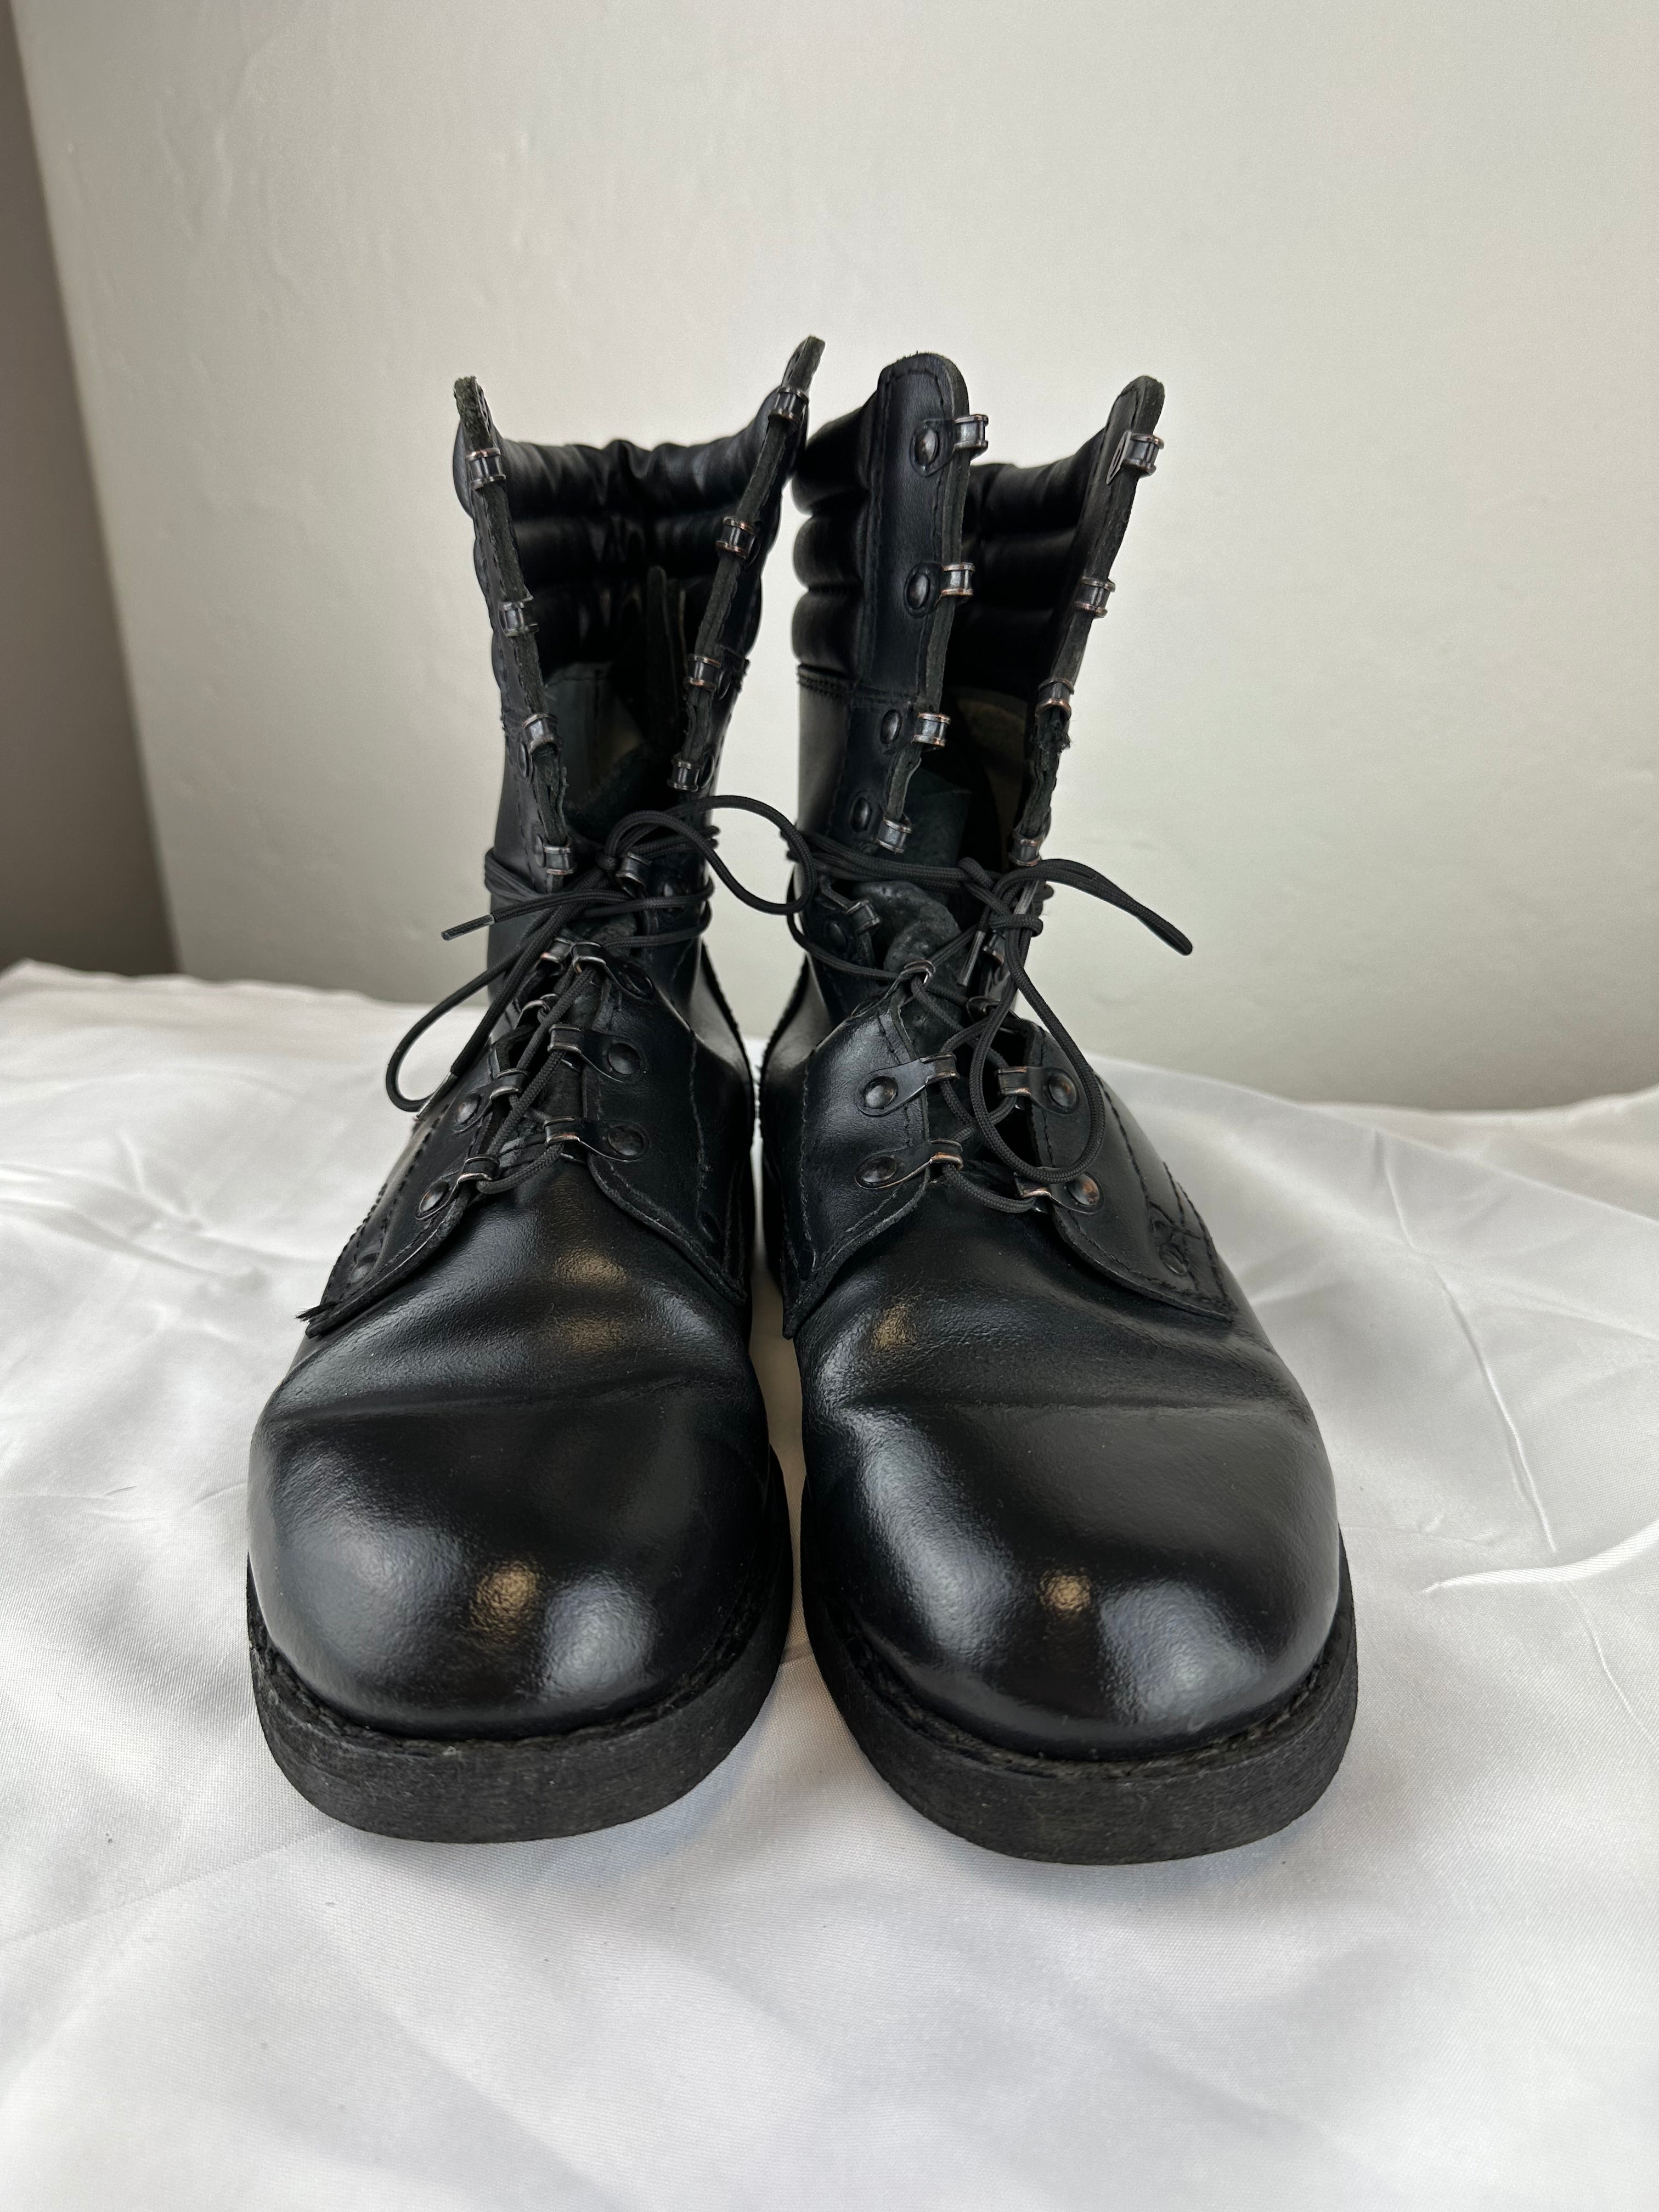 Vintage Military Combat Boots - size 39